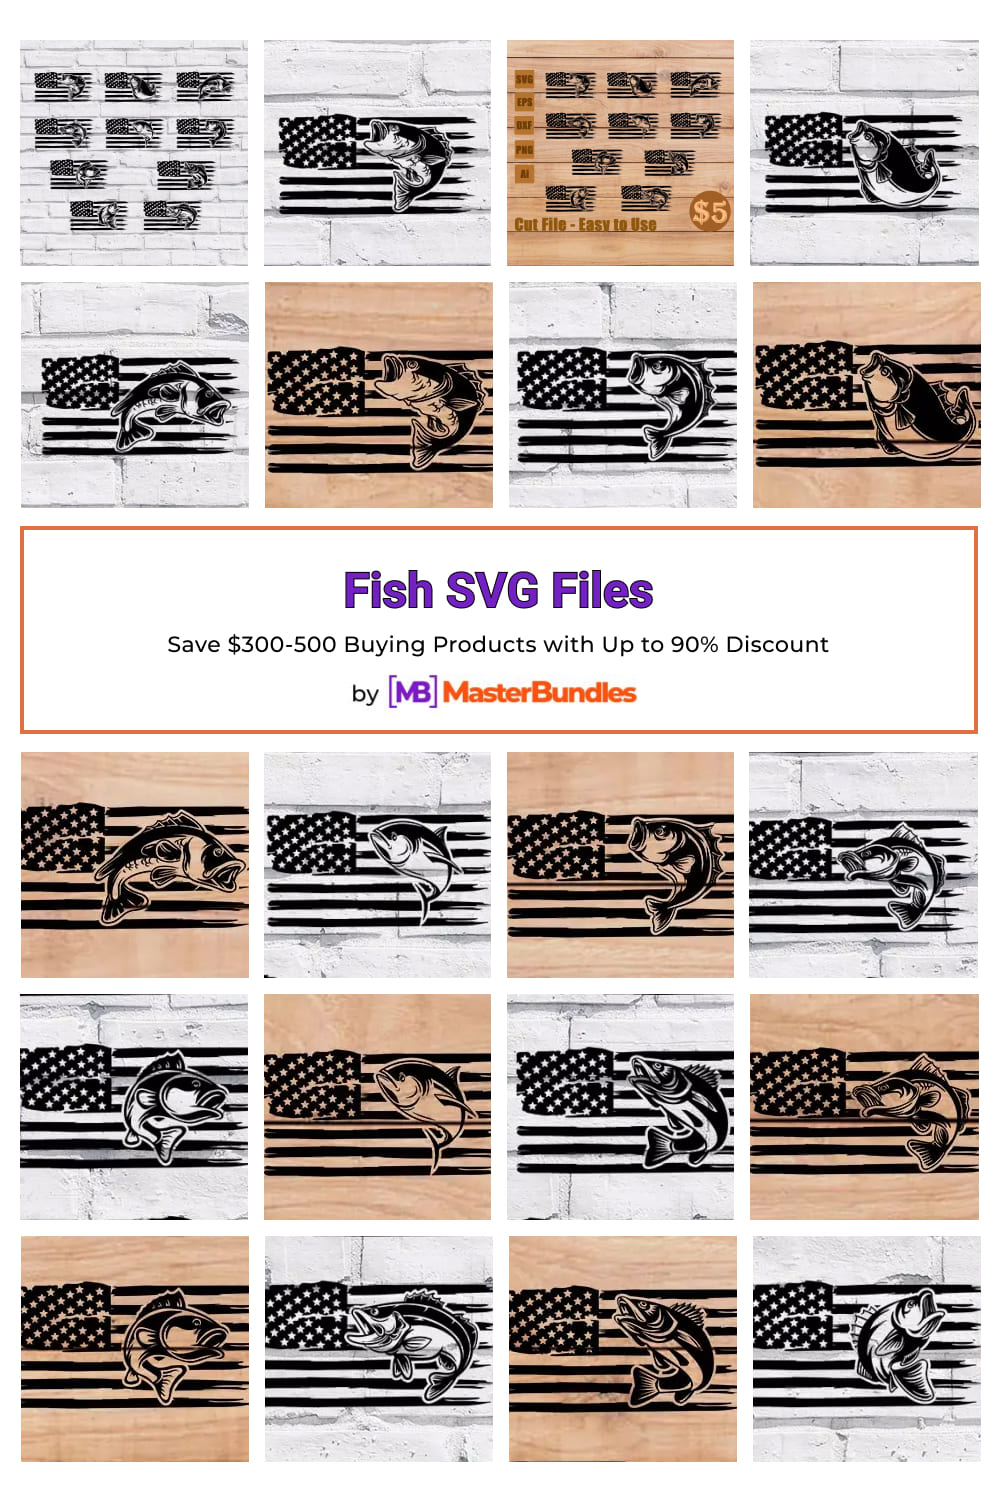 Fish SVG Files for pinterest.